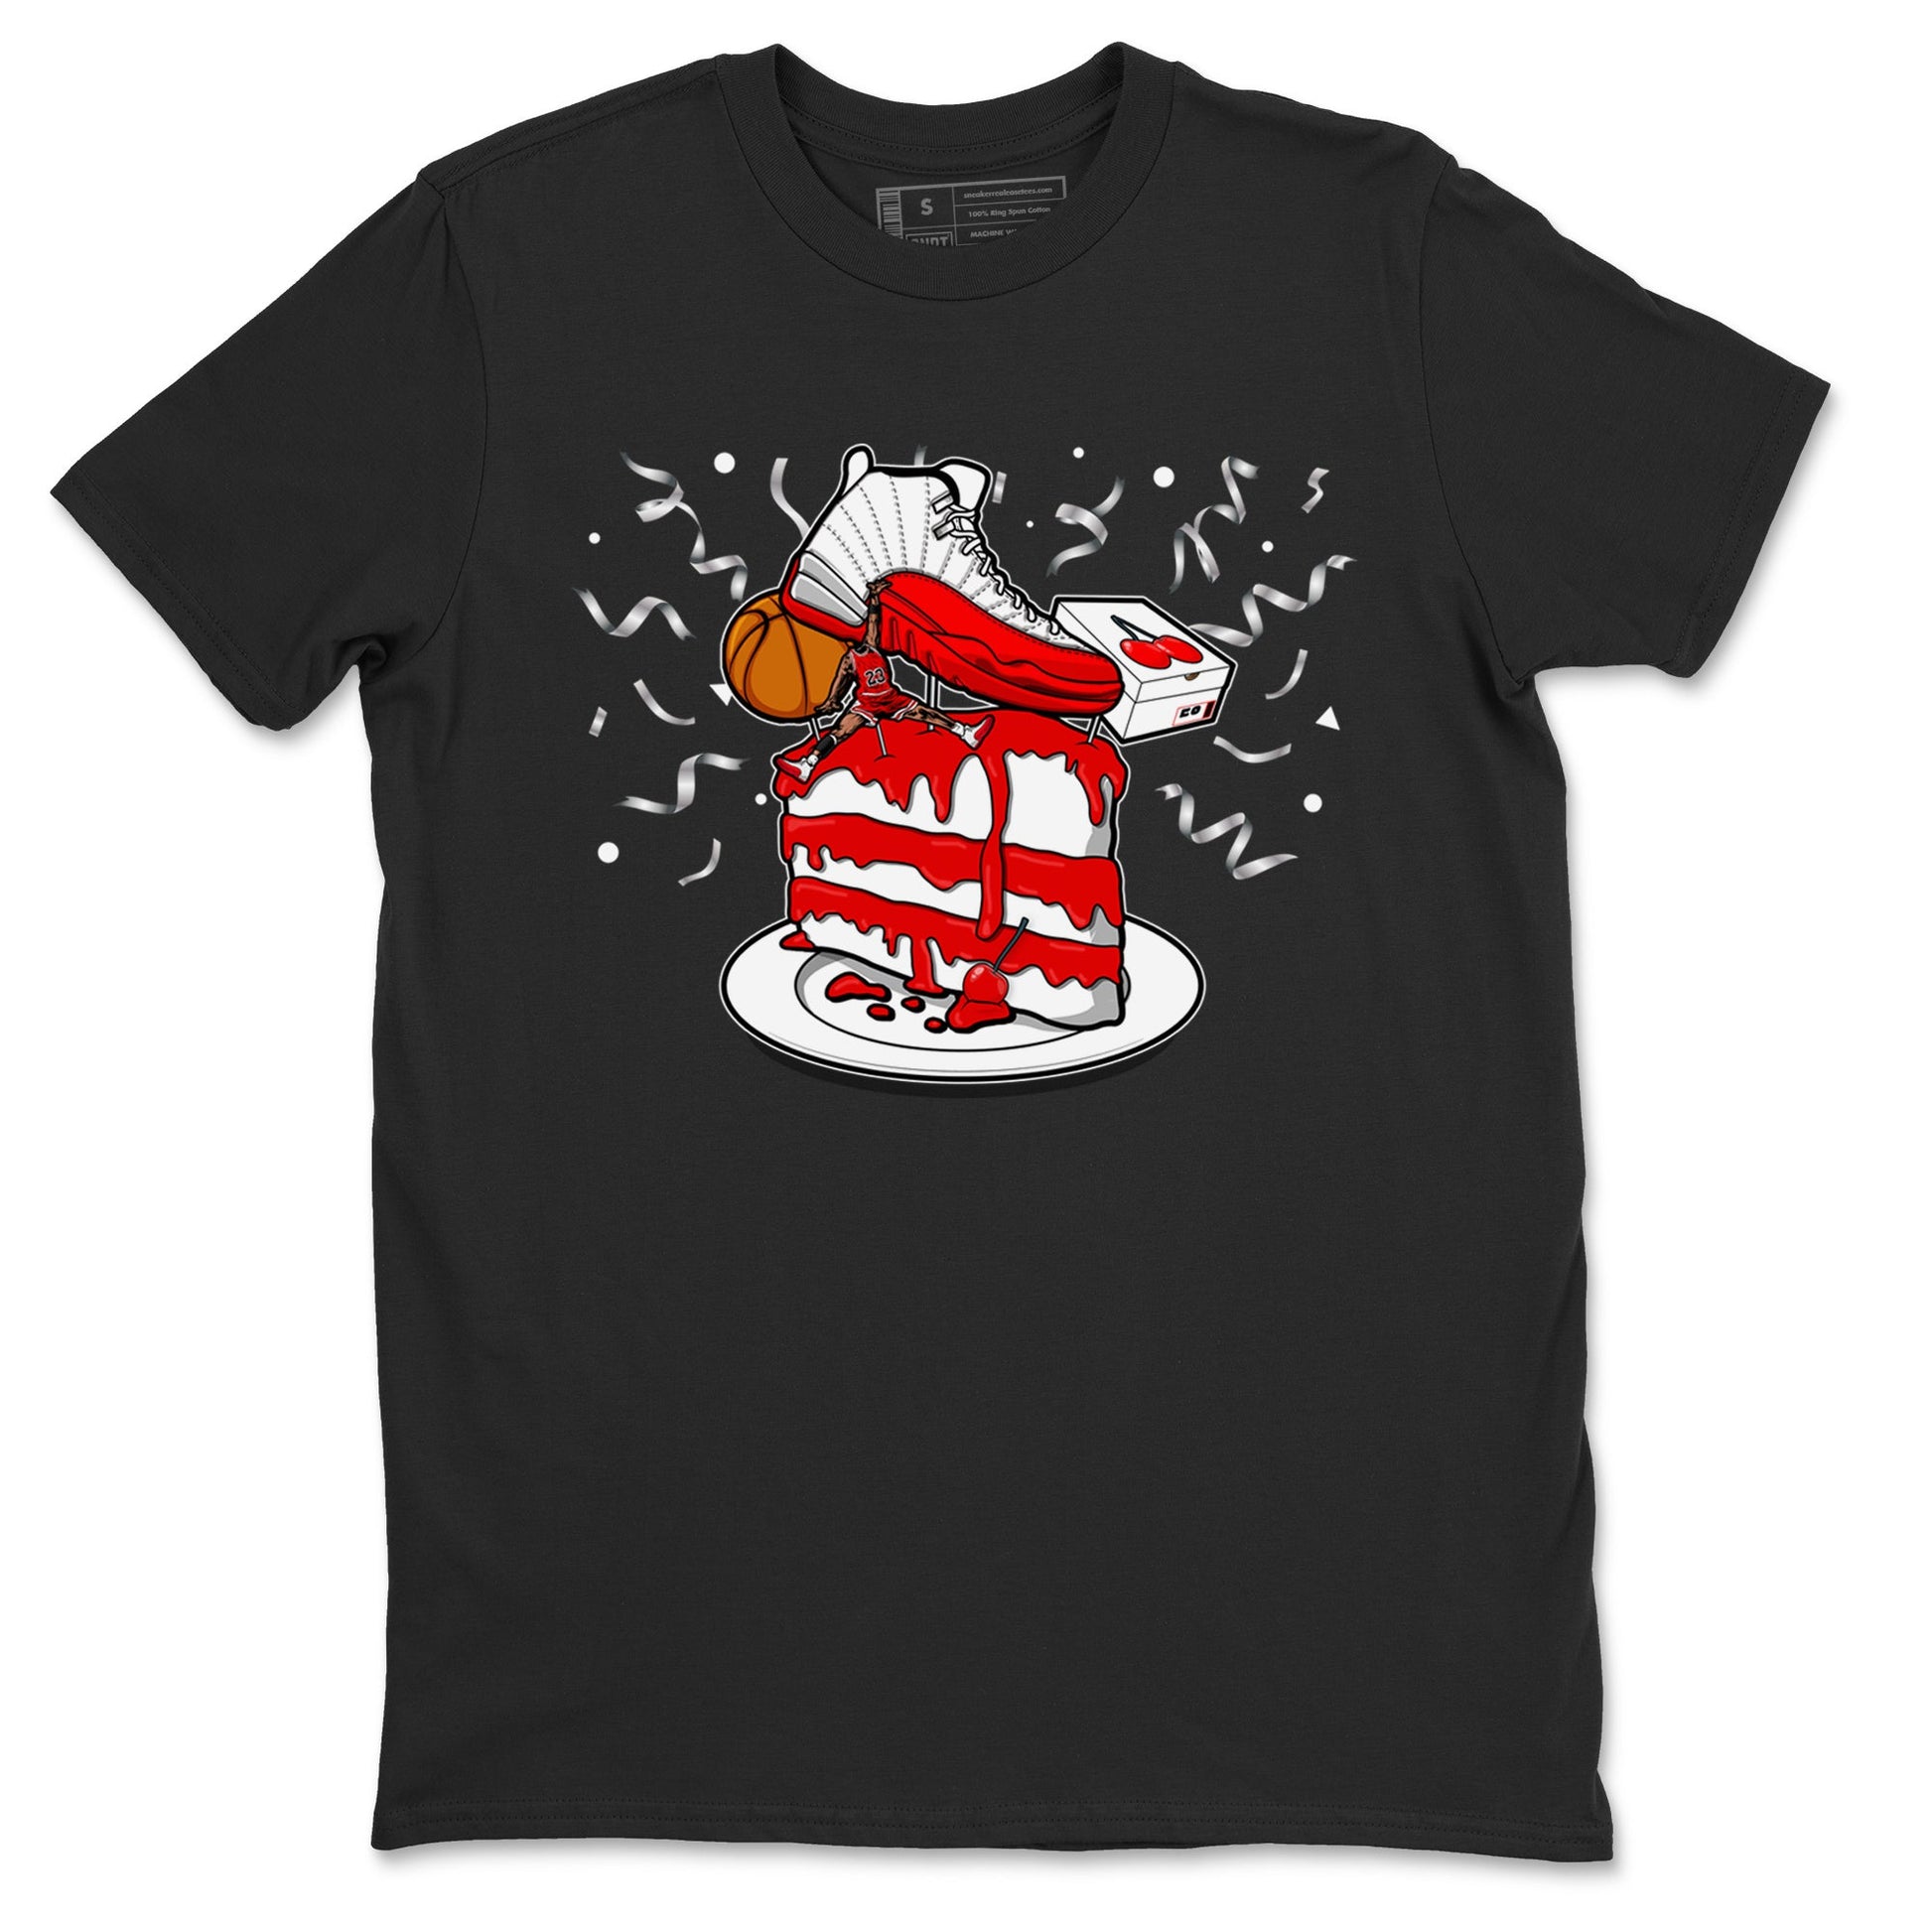 Jordan 12 Retro Cherry shirt to match jordans Varsity Red Sneaker Topper special sneaker matching tees 12s Cherry SNRT sneaker tees Unisex Black 2 T-Shirt